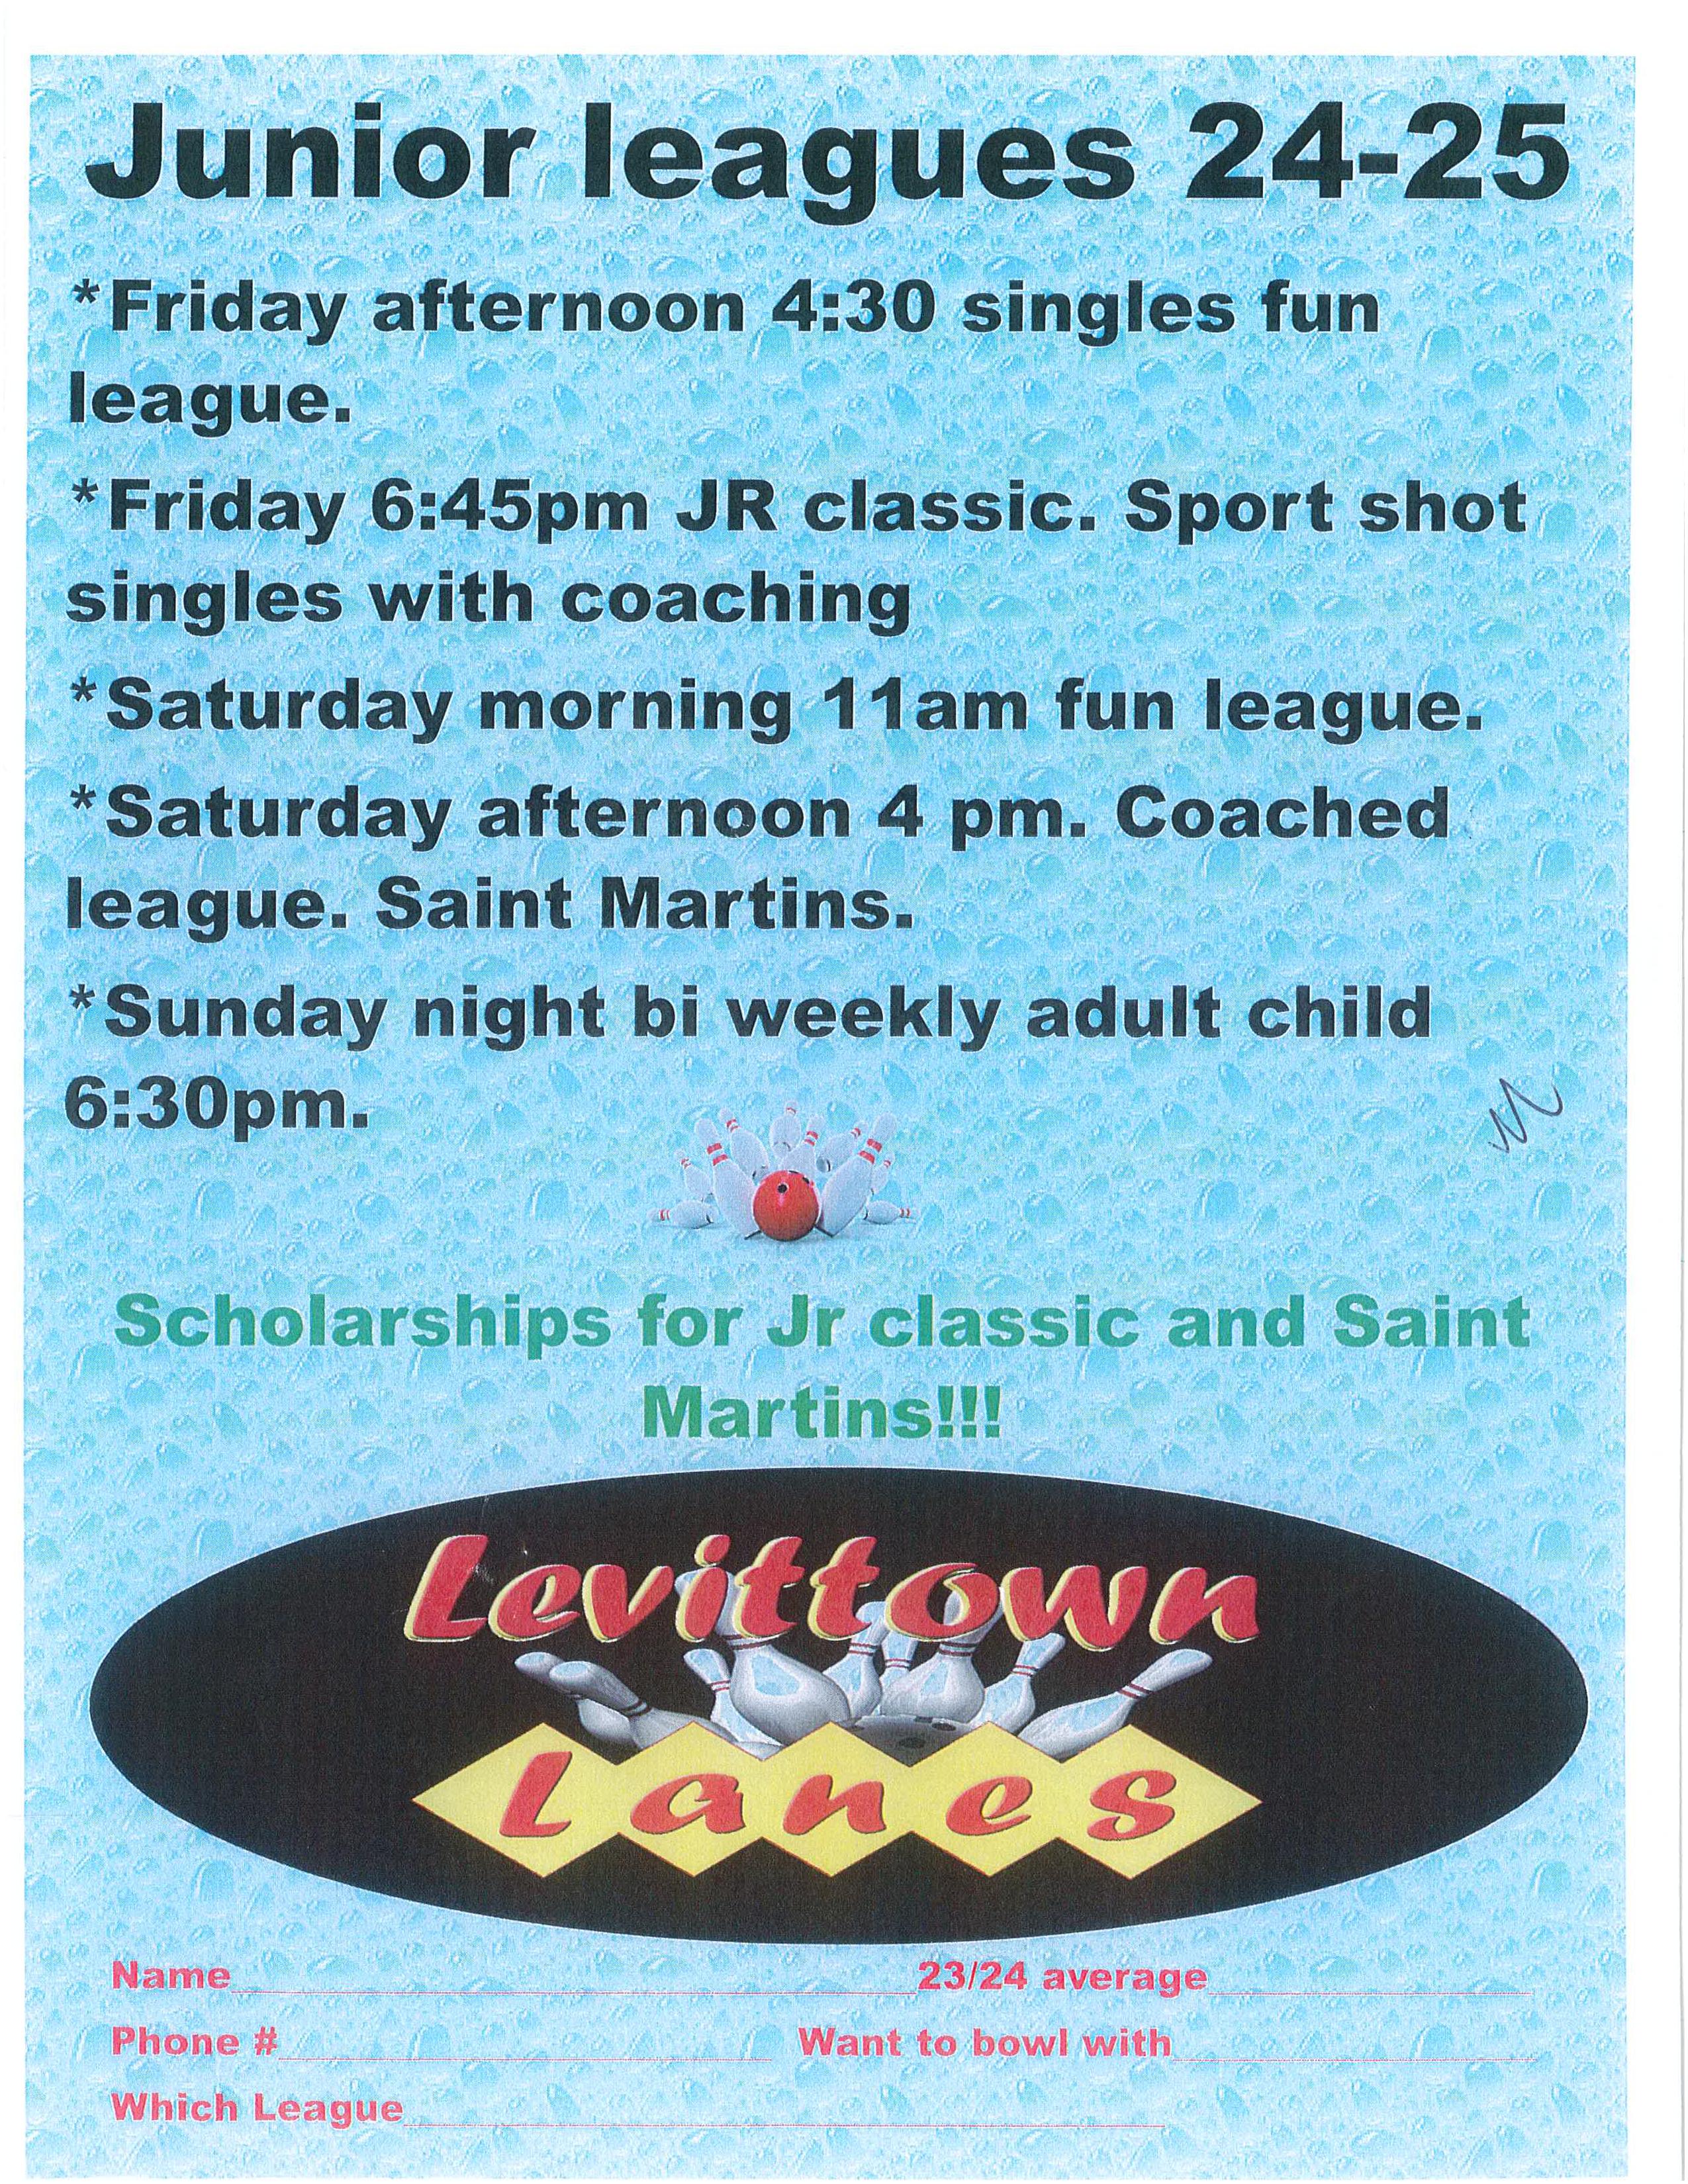 Junior League Starts 24/25 at Levittown Lanes